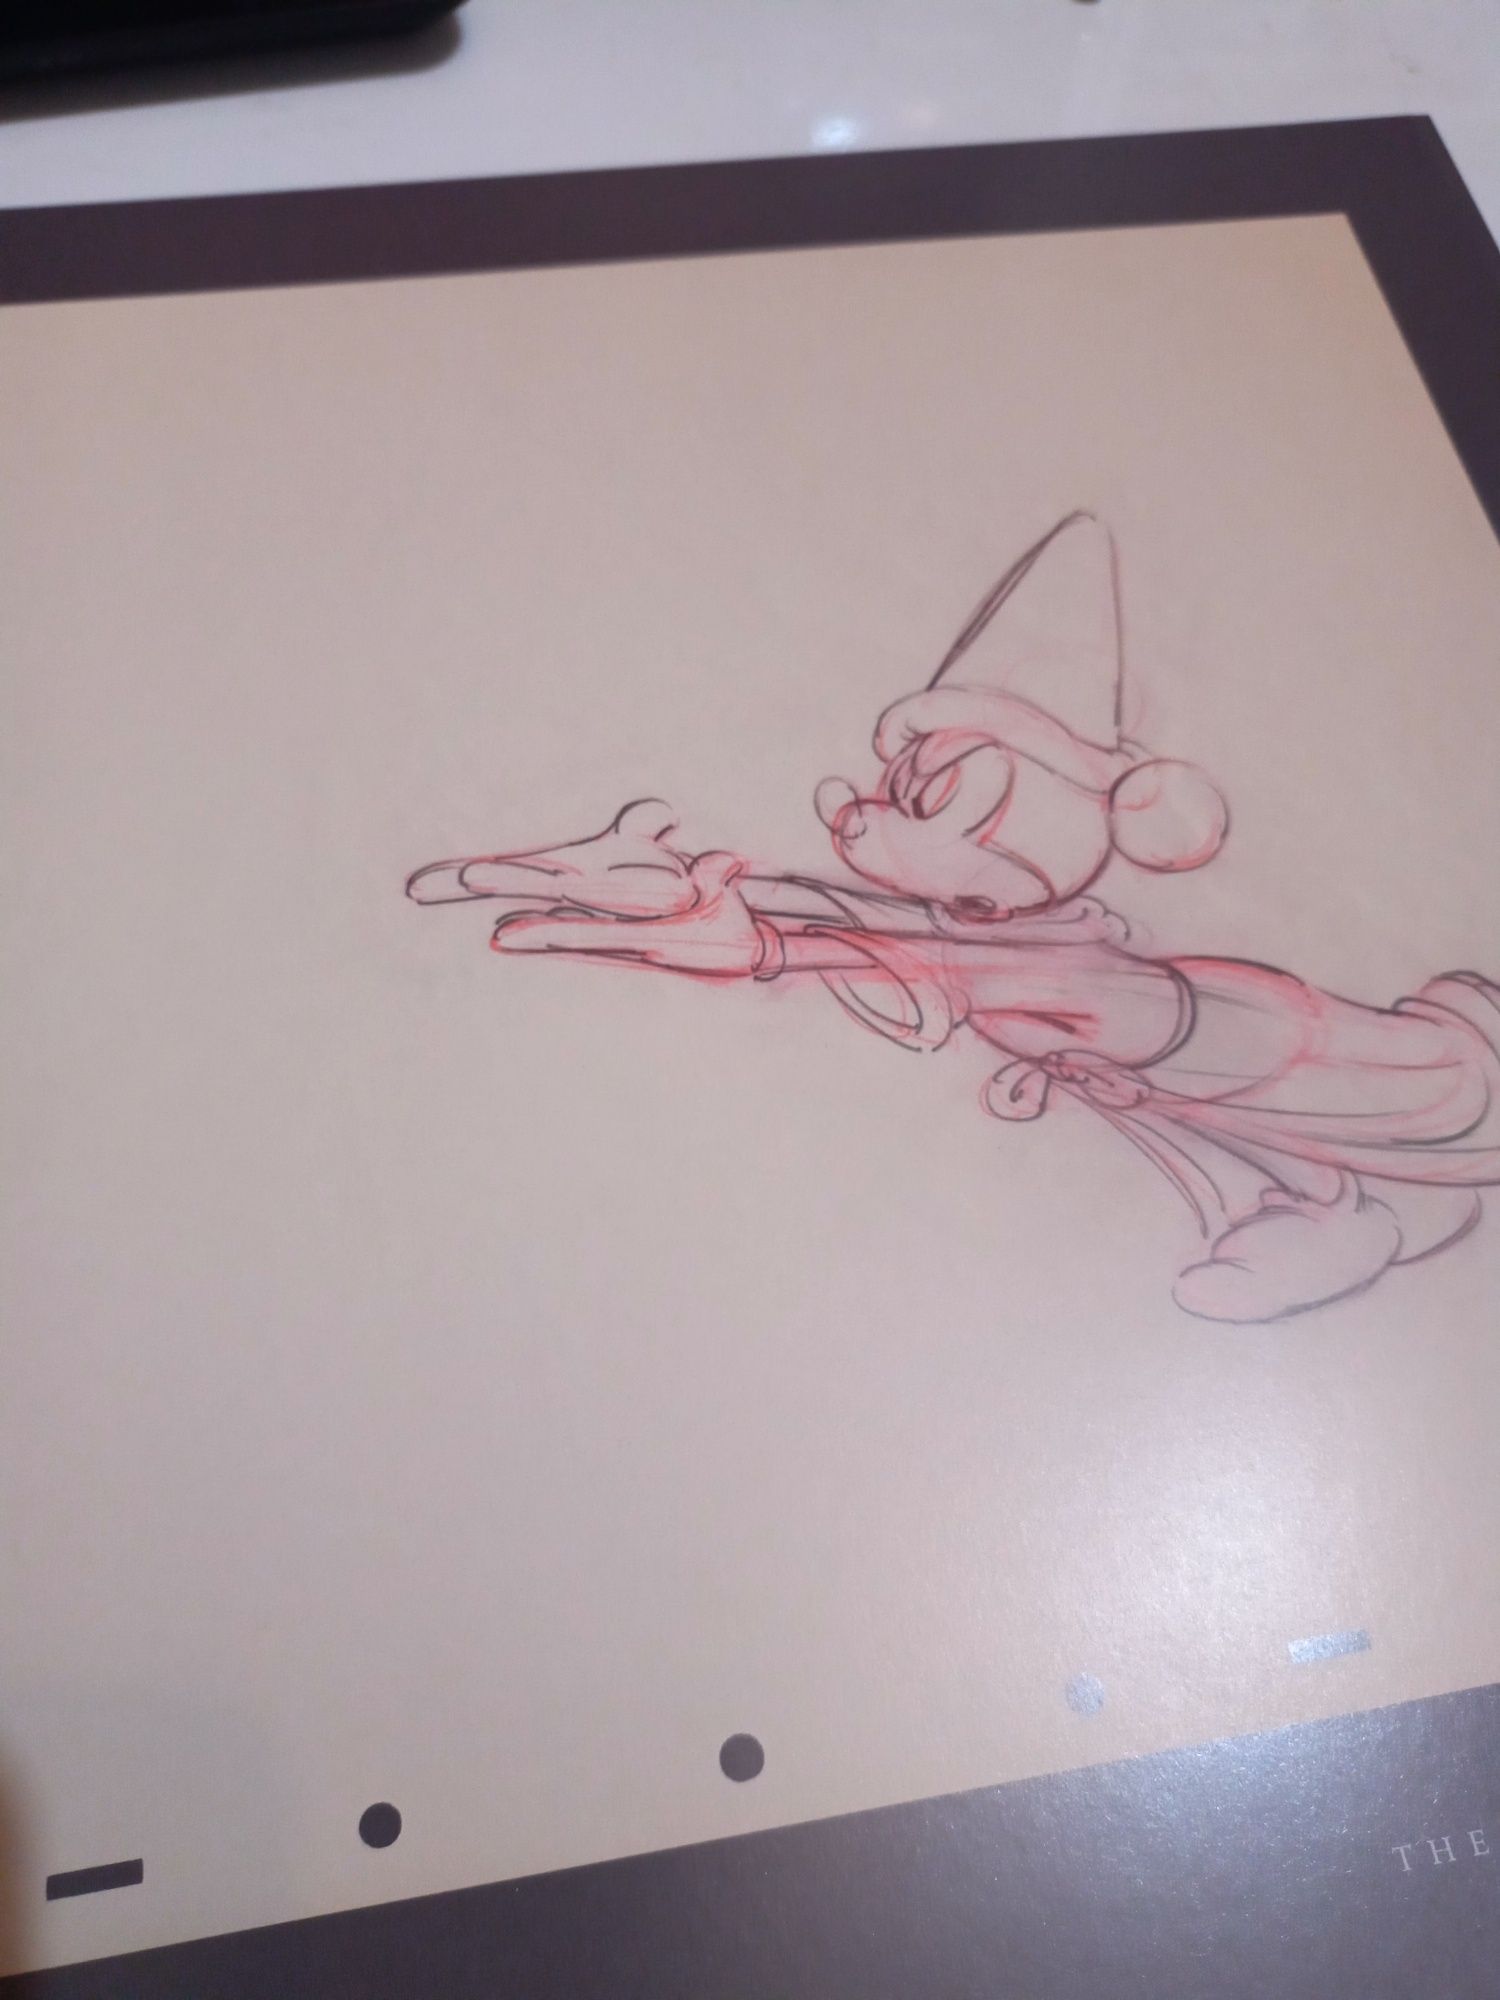 Walt Disney Animation Studios the Archive Series: Animation